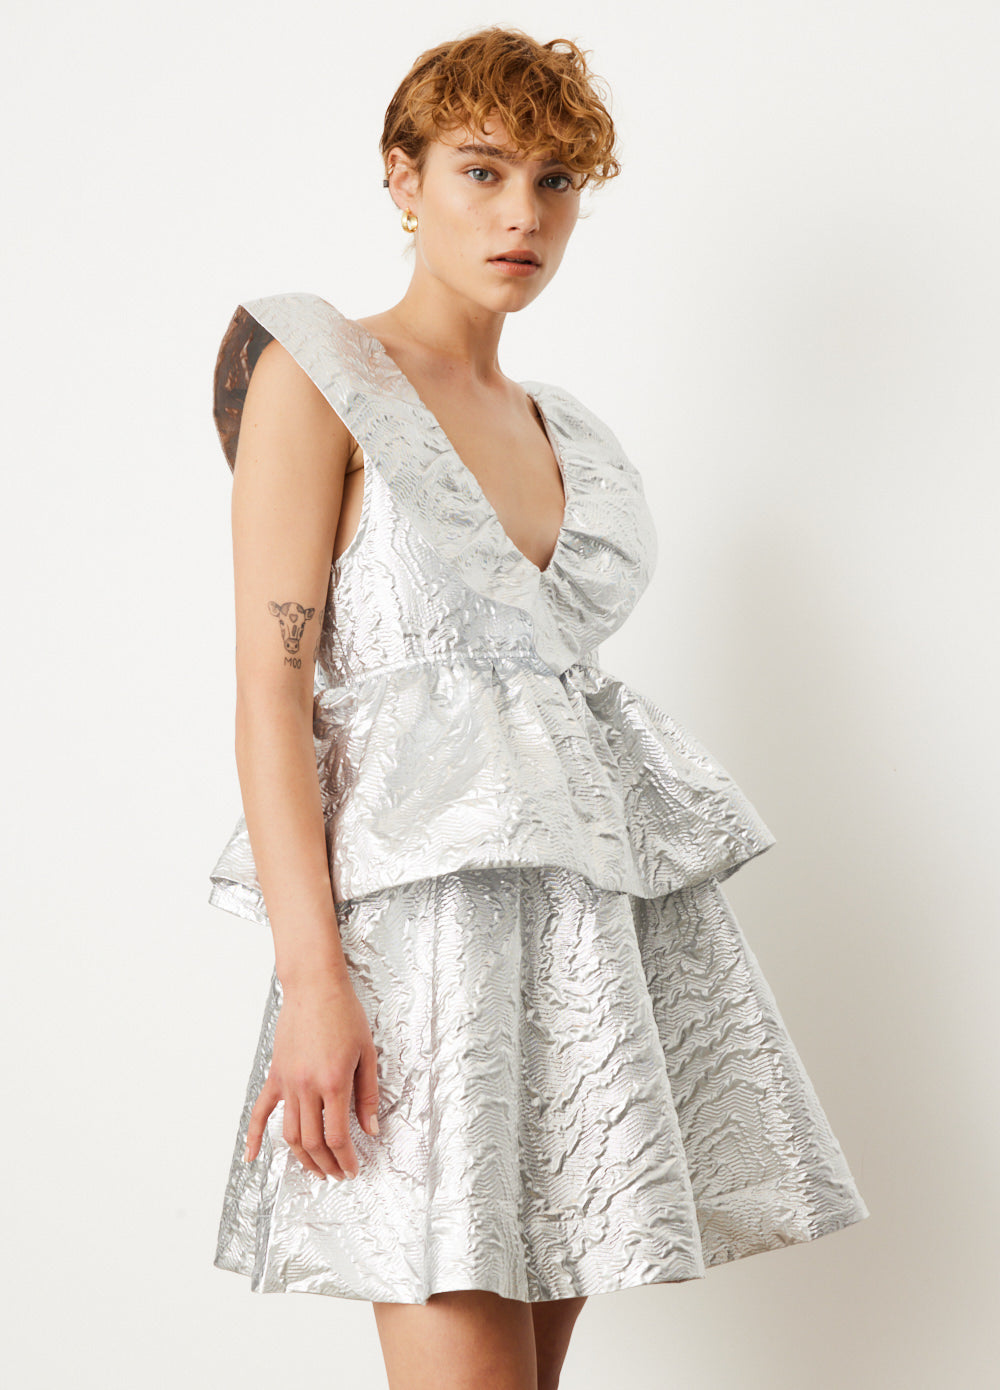 Metallic Jacquard Layer Dress